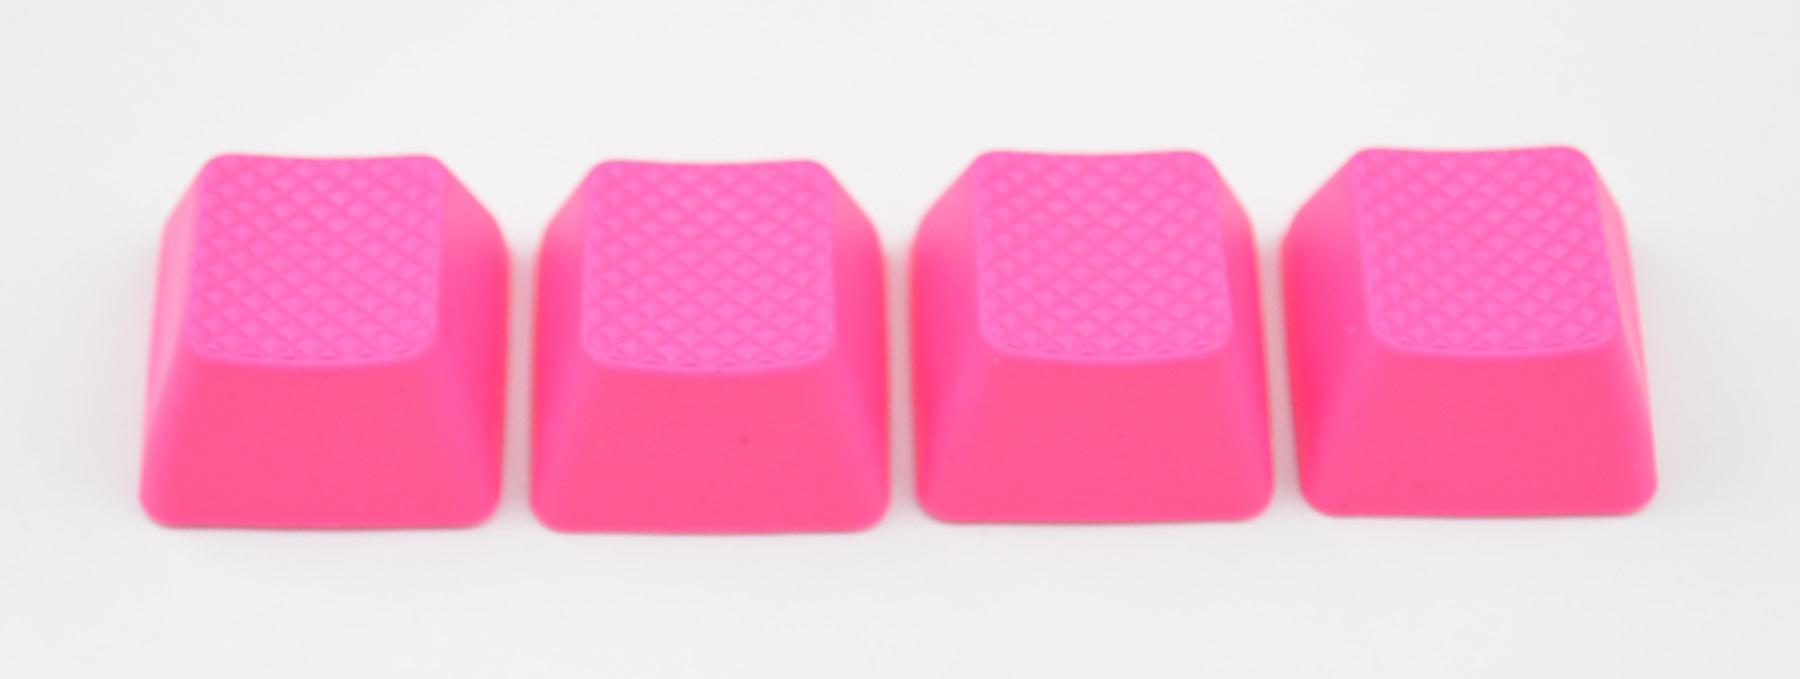 Tai-Hao 4 Key TPR Blank Rubber Keycap Set Neon Pink Row 1 MKHR0RN1NL |38499|